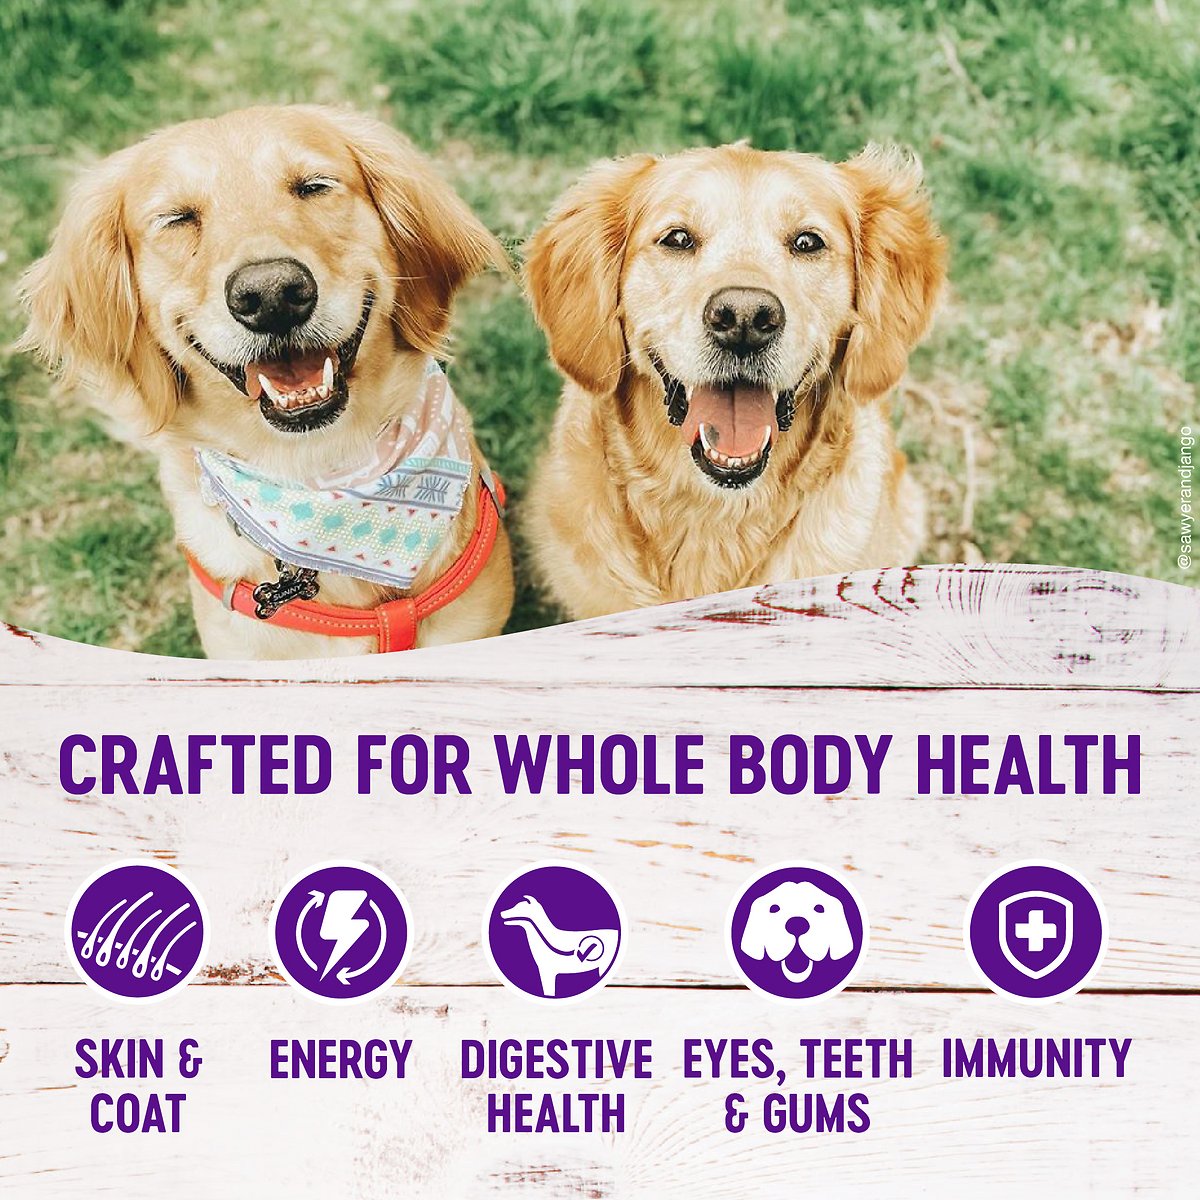 Wellness Complete Health Senior Deboned Chicken & Barley Recipe Dry Dog Food  Dog Food  | PetMax Canada